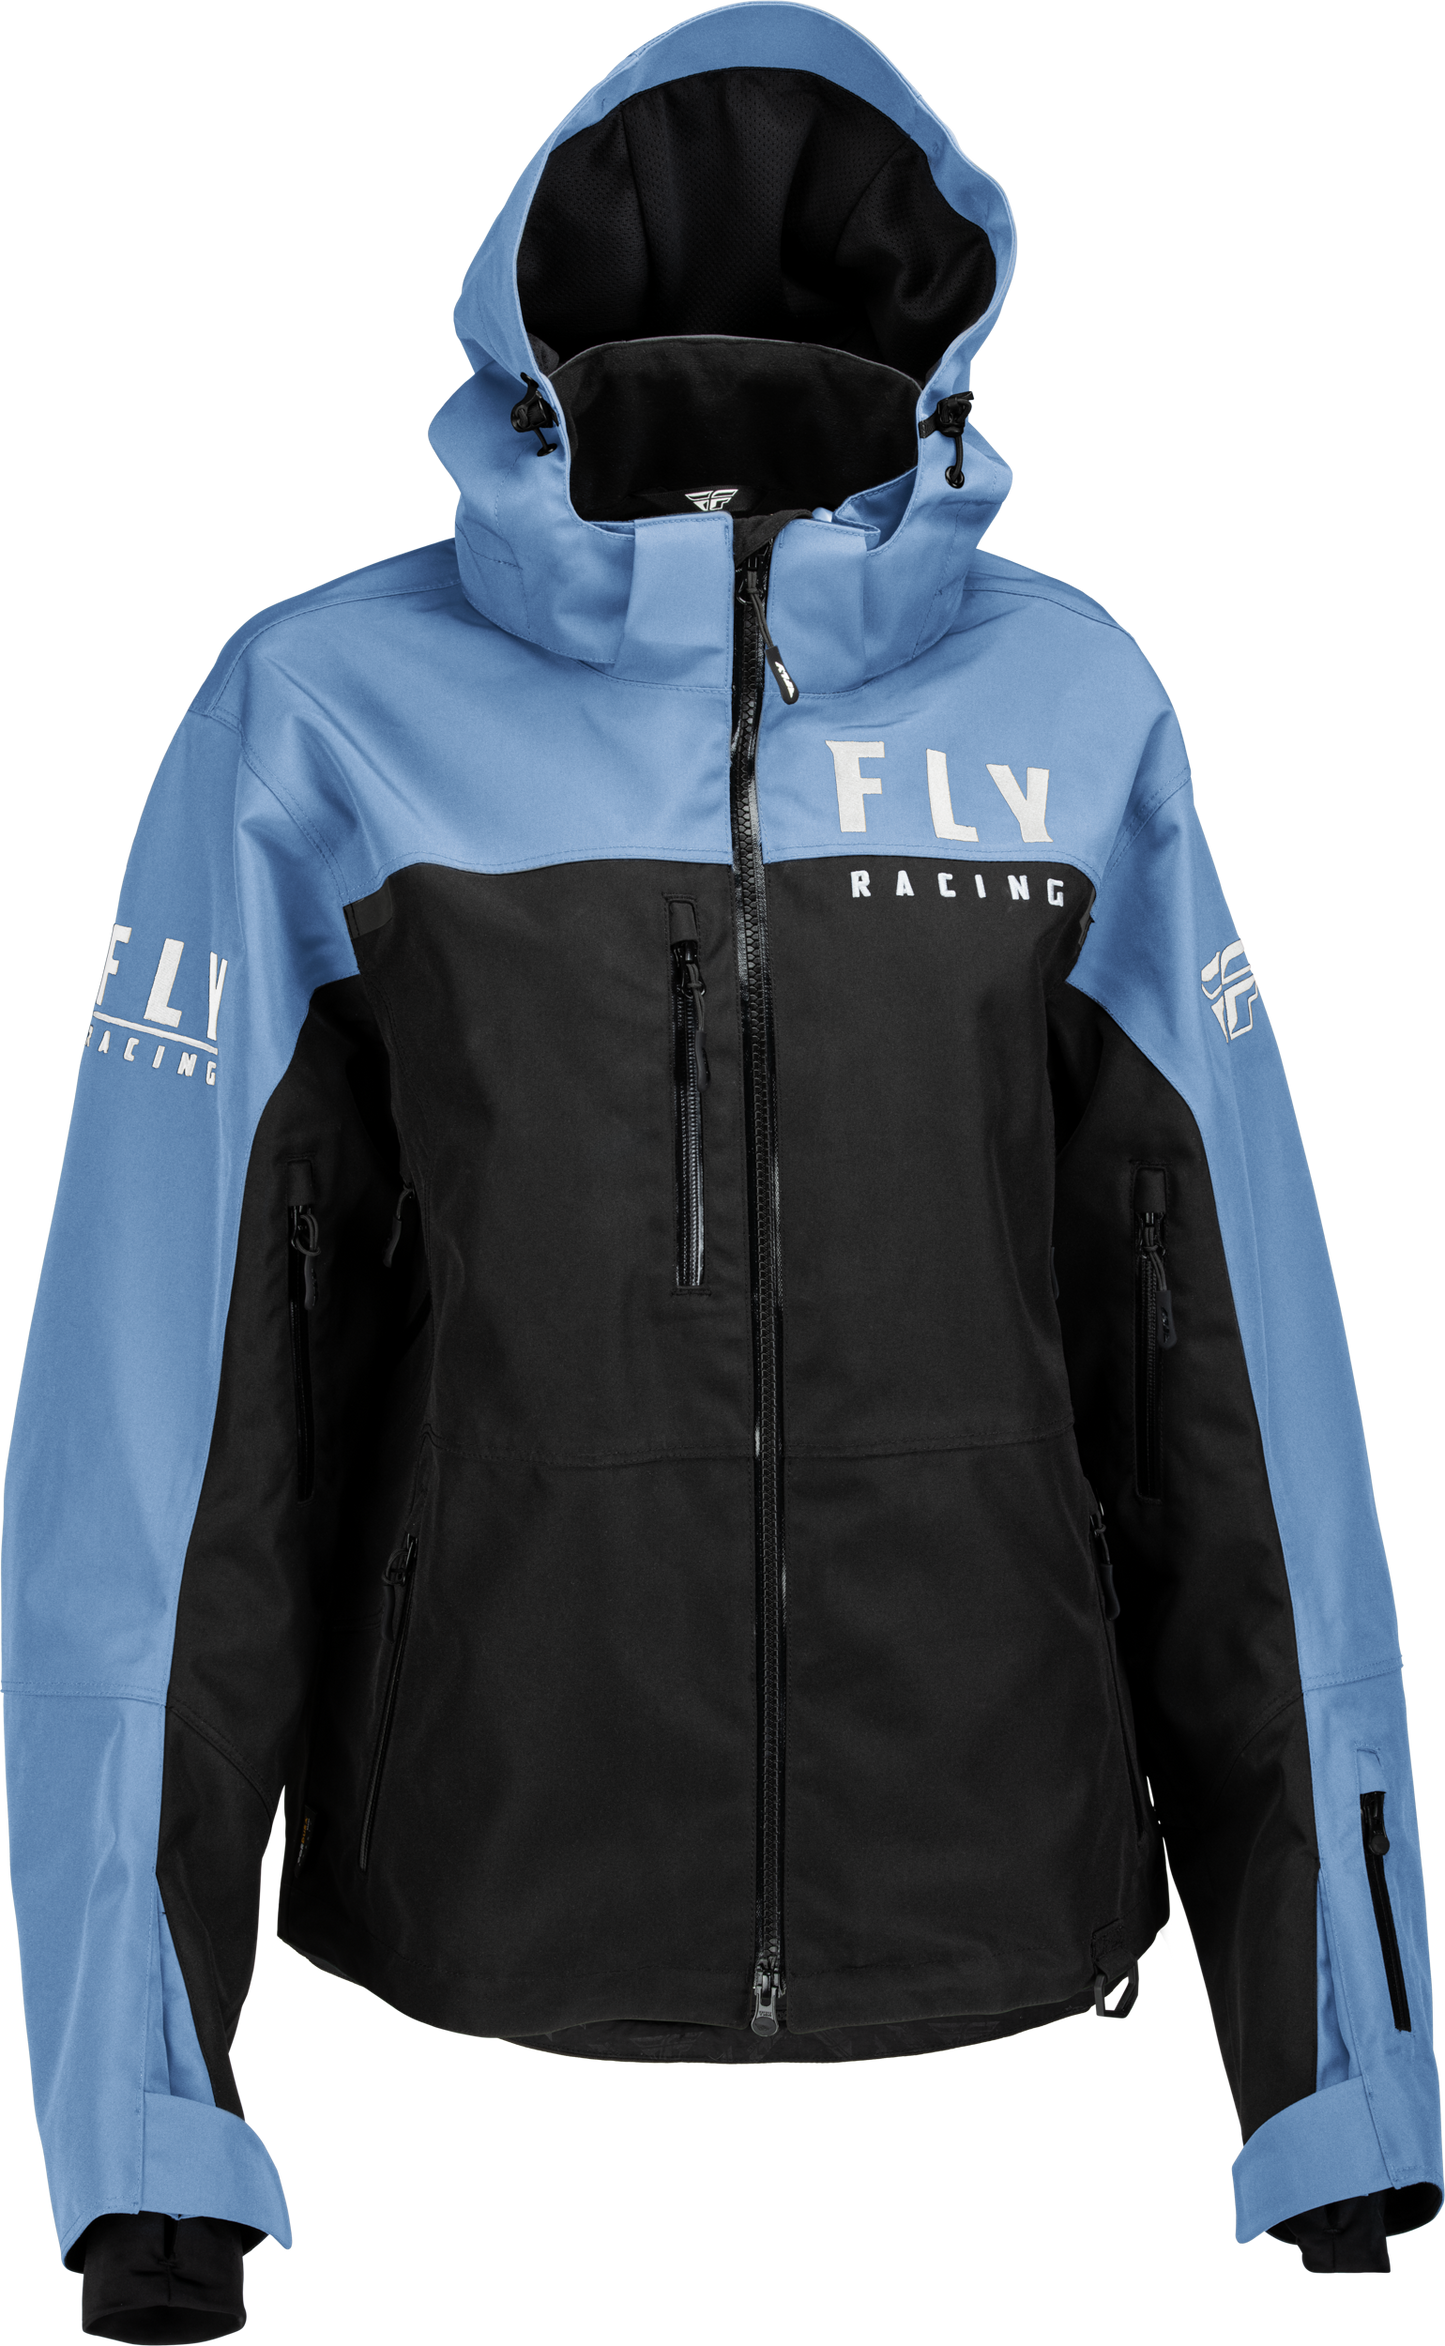 FLY RACING Women's Carbon Jacket Black/Blue 2x 470-45012X